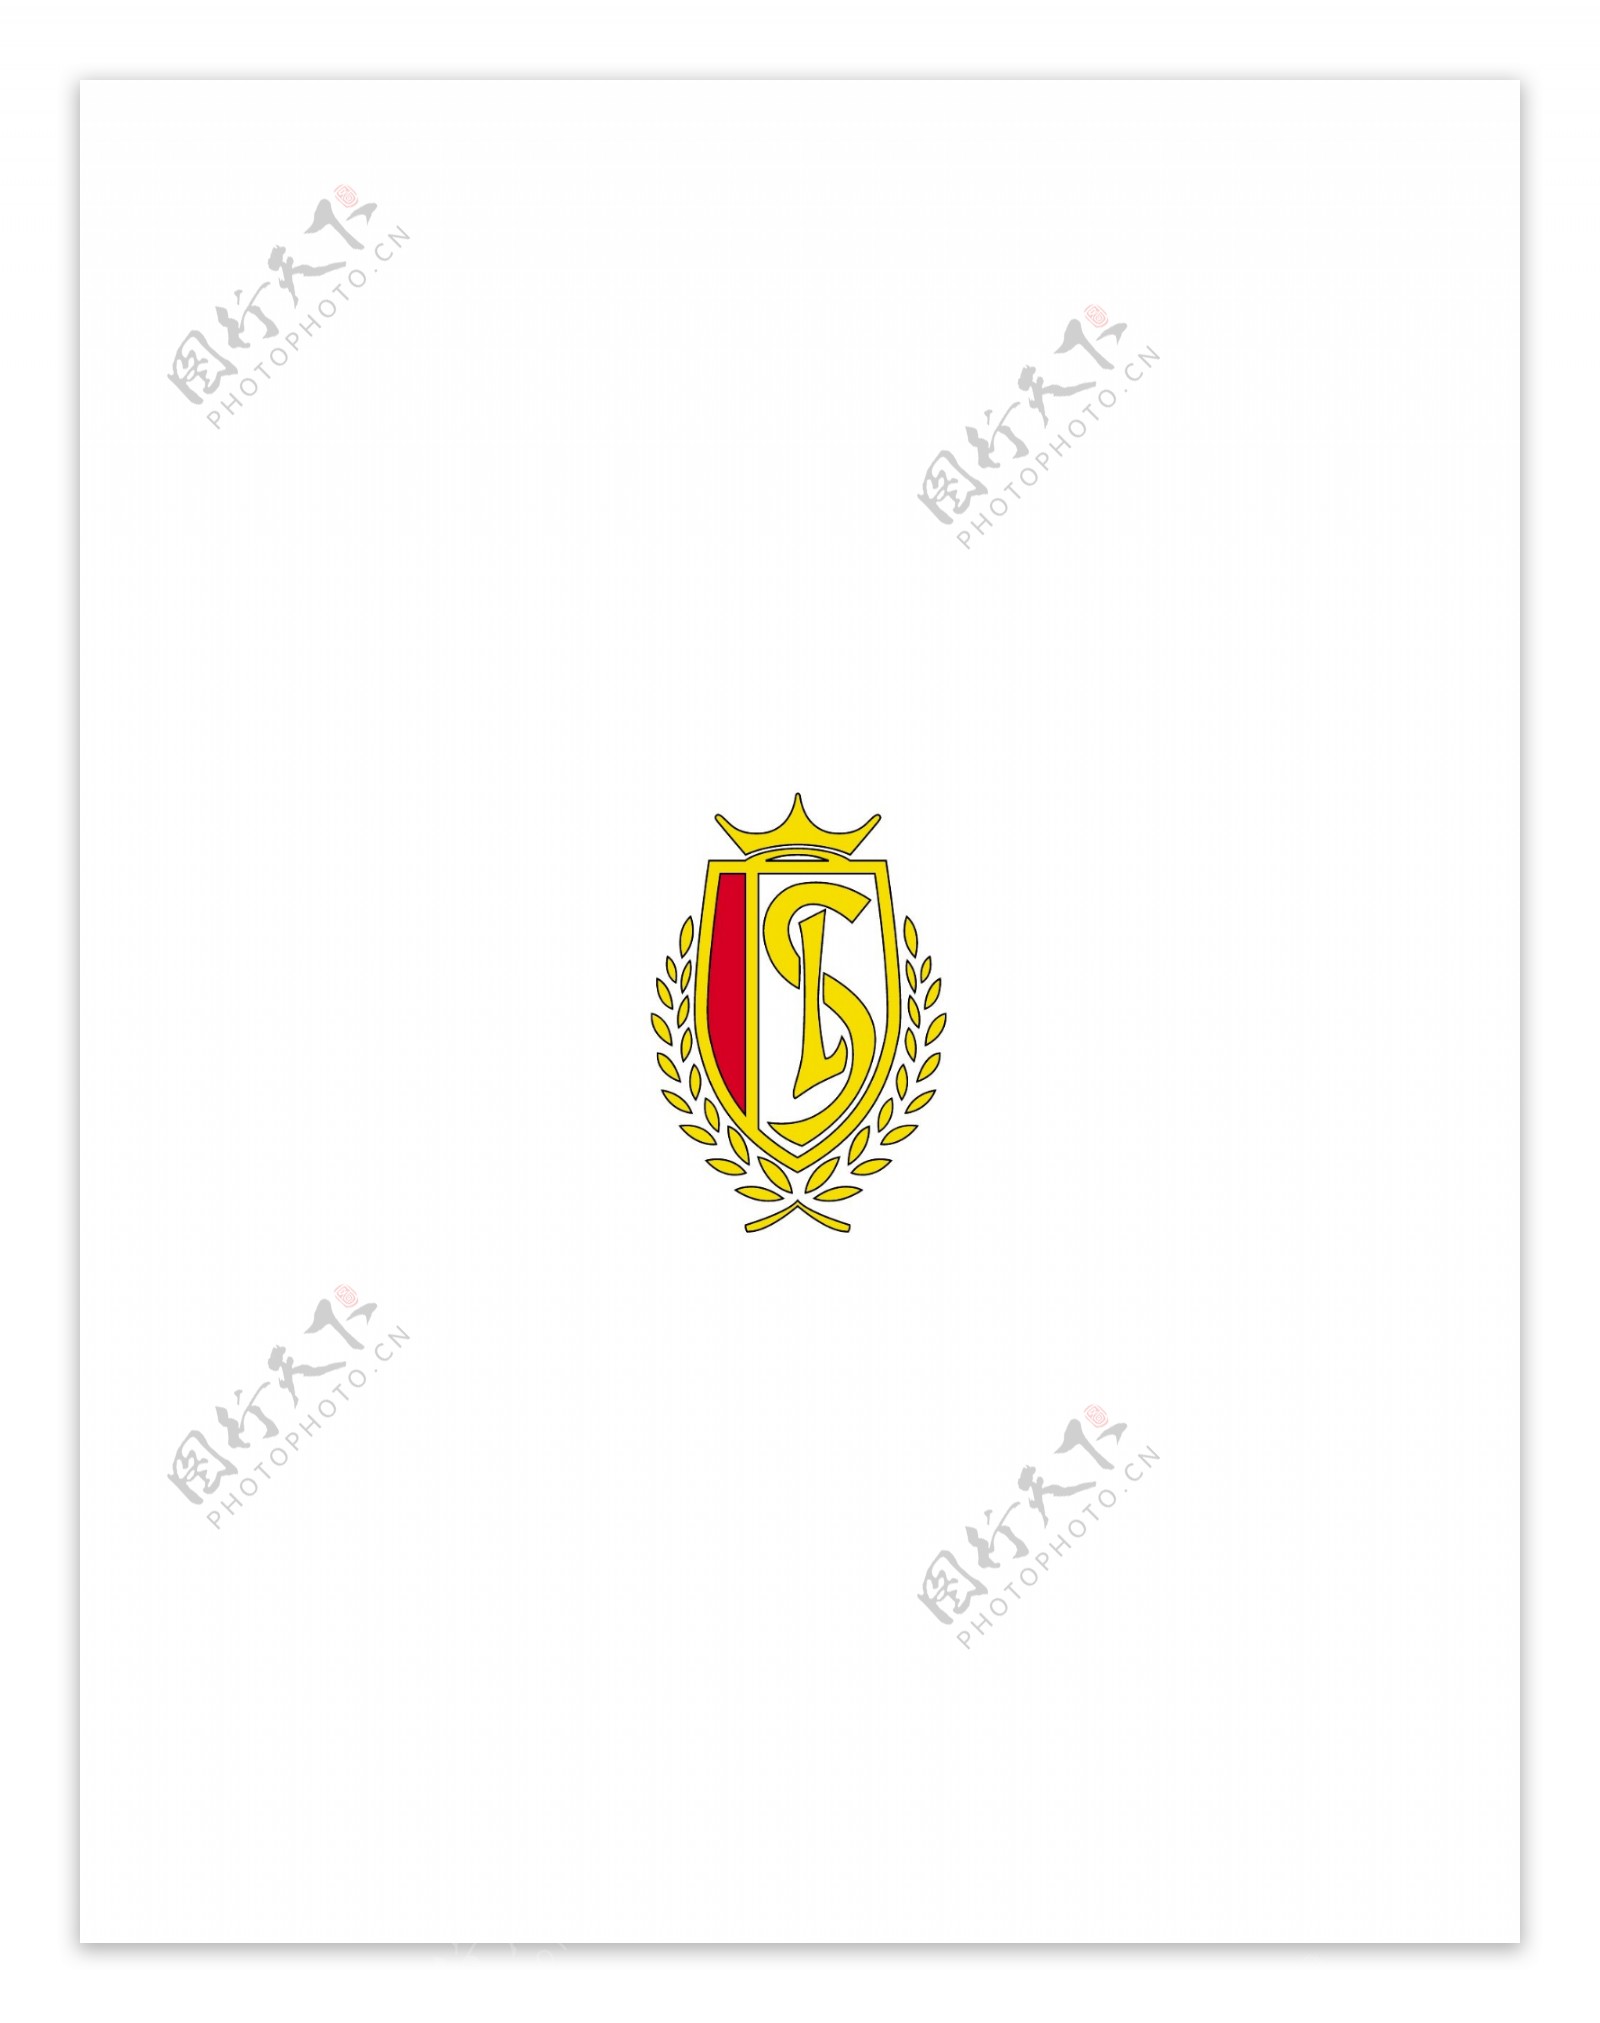 StdLiegelogo设计欣赏职业足球队标志StdLiege下载标志设计欣赏